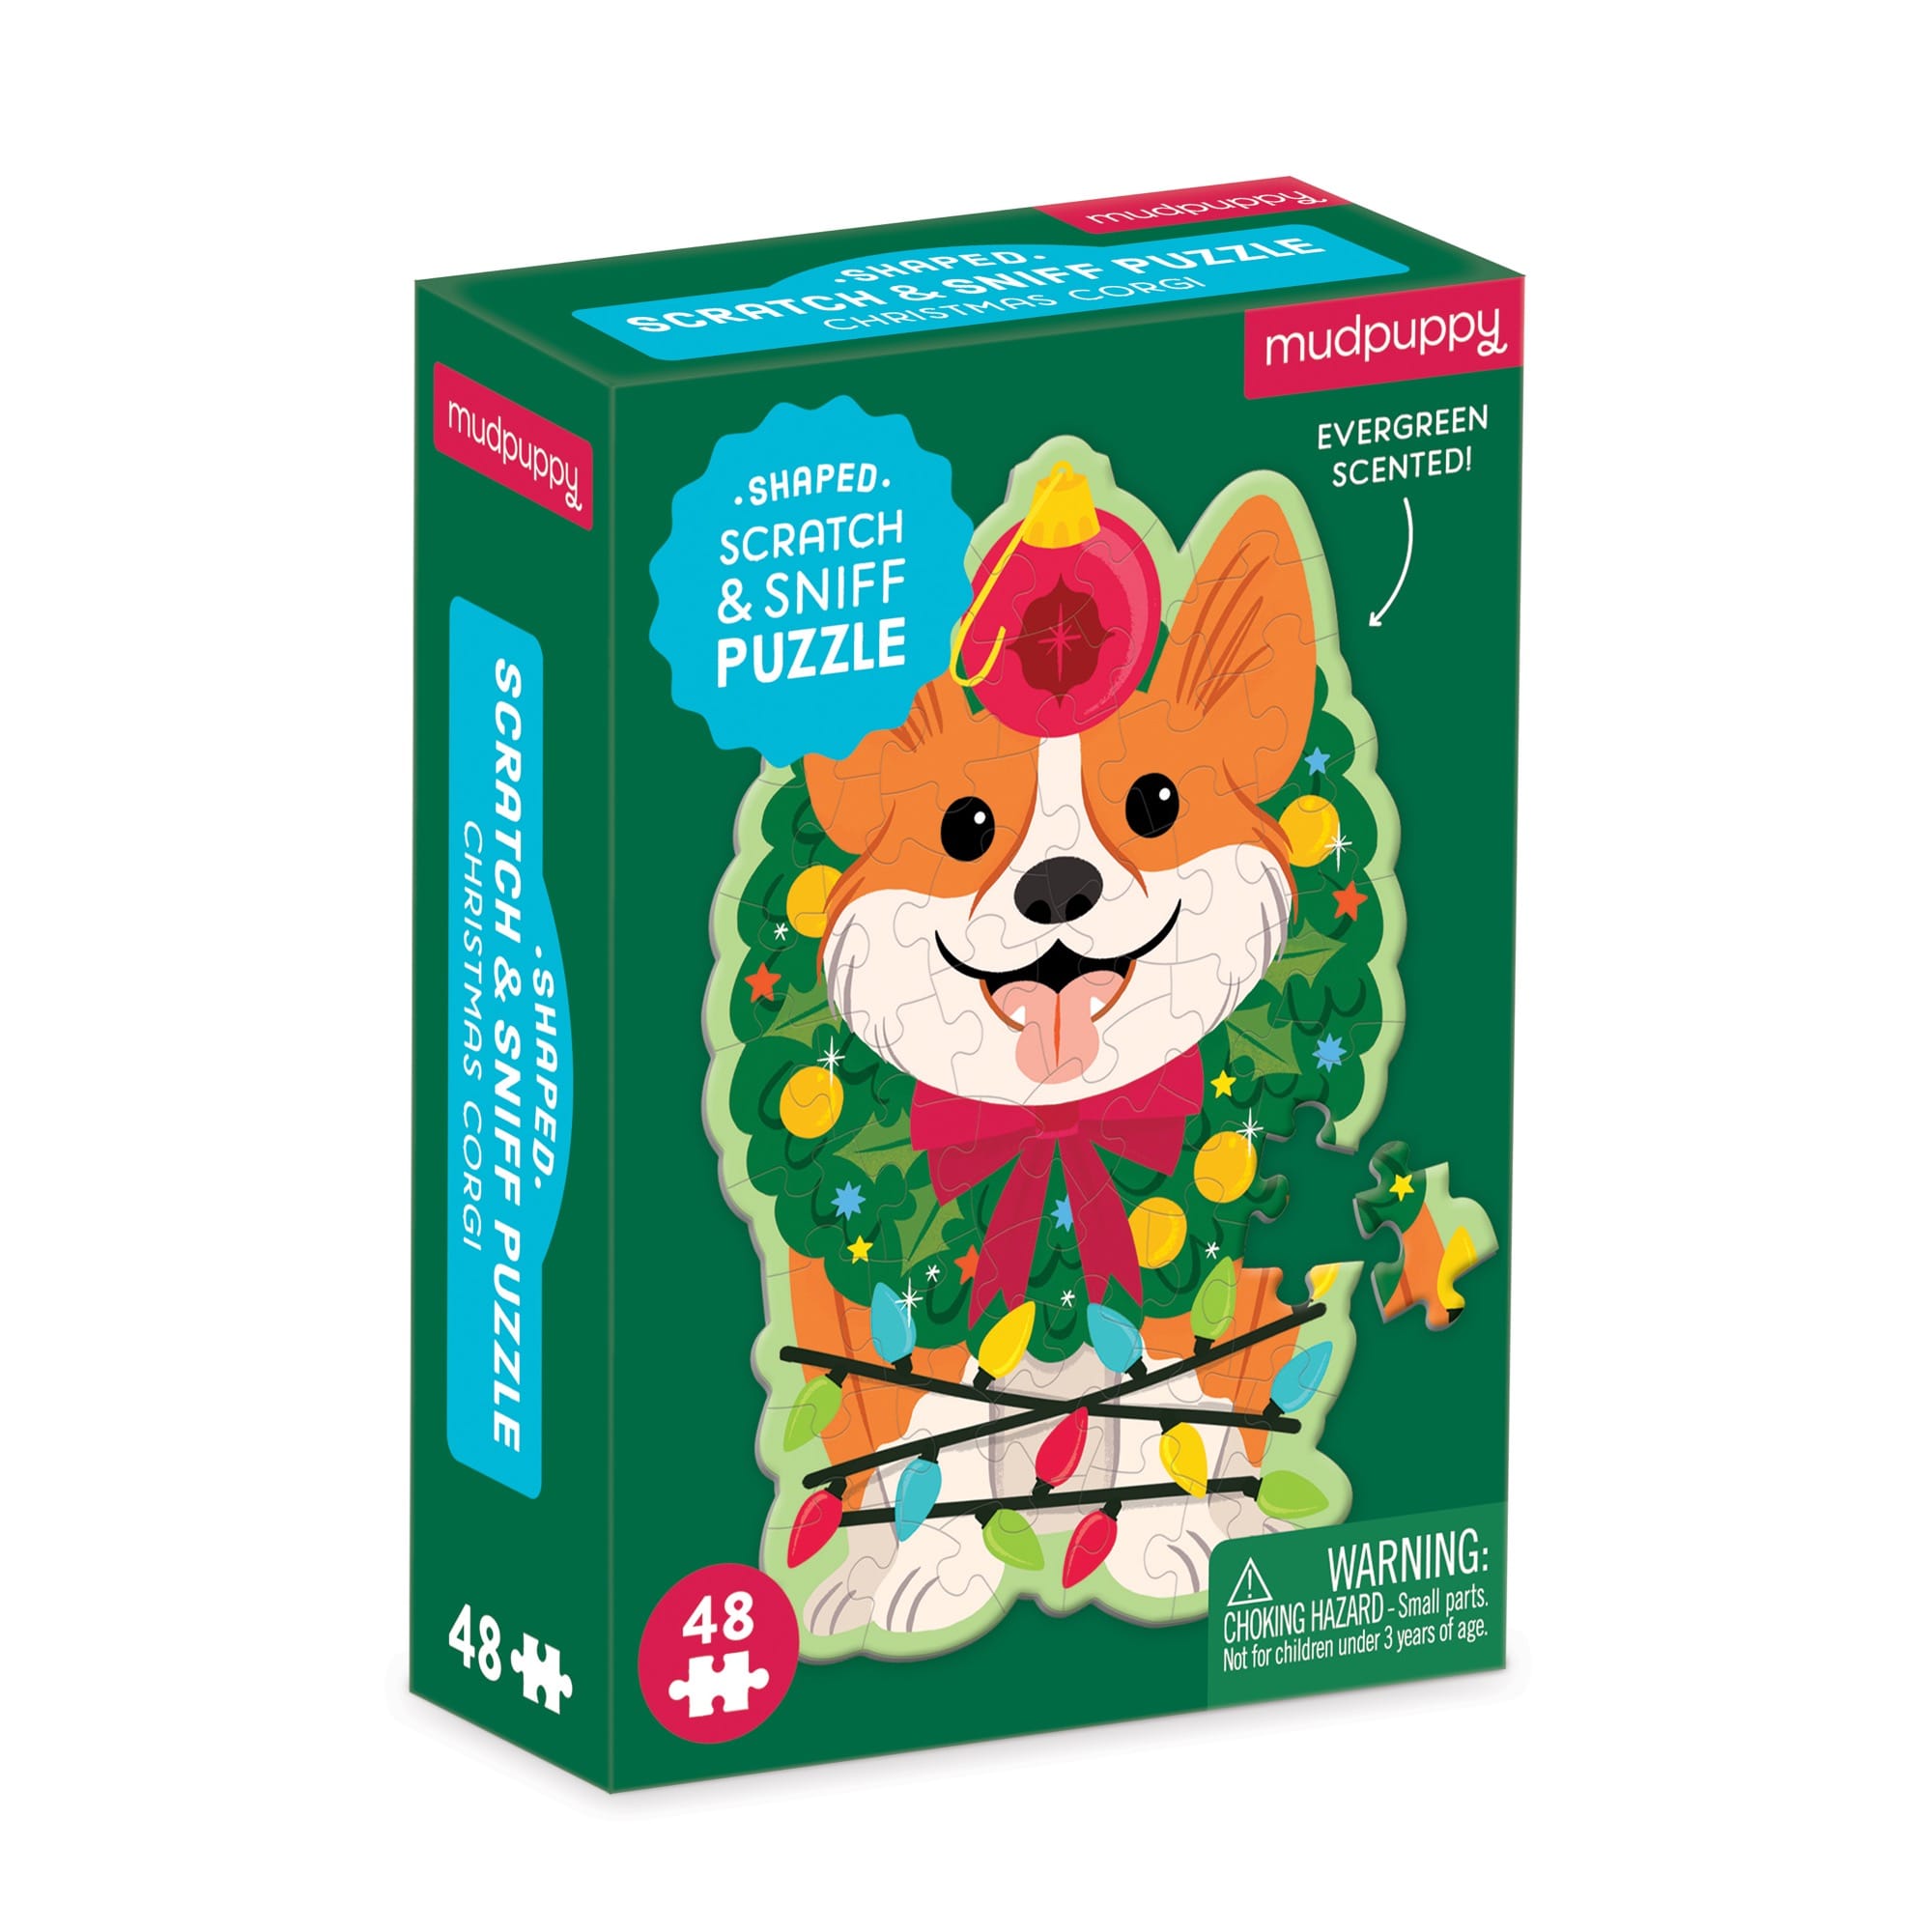 Corgi Jigsaw Puzzle for Adults Interlocking Games Christmas Dog Gift NWT